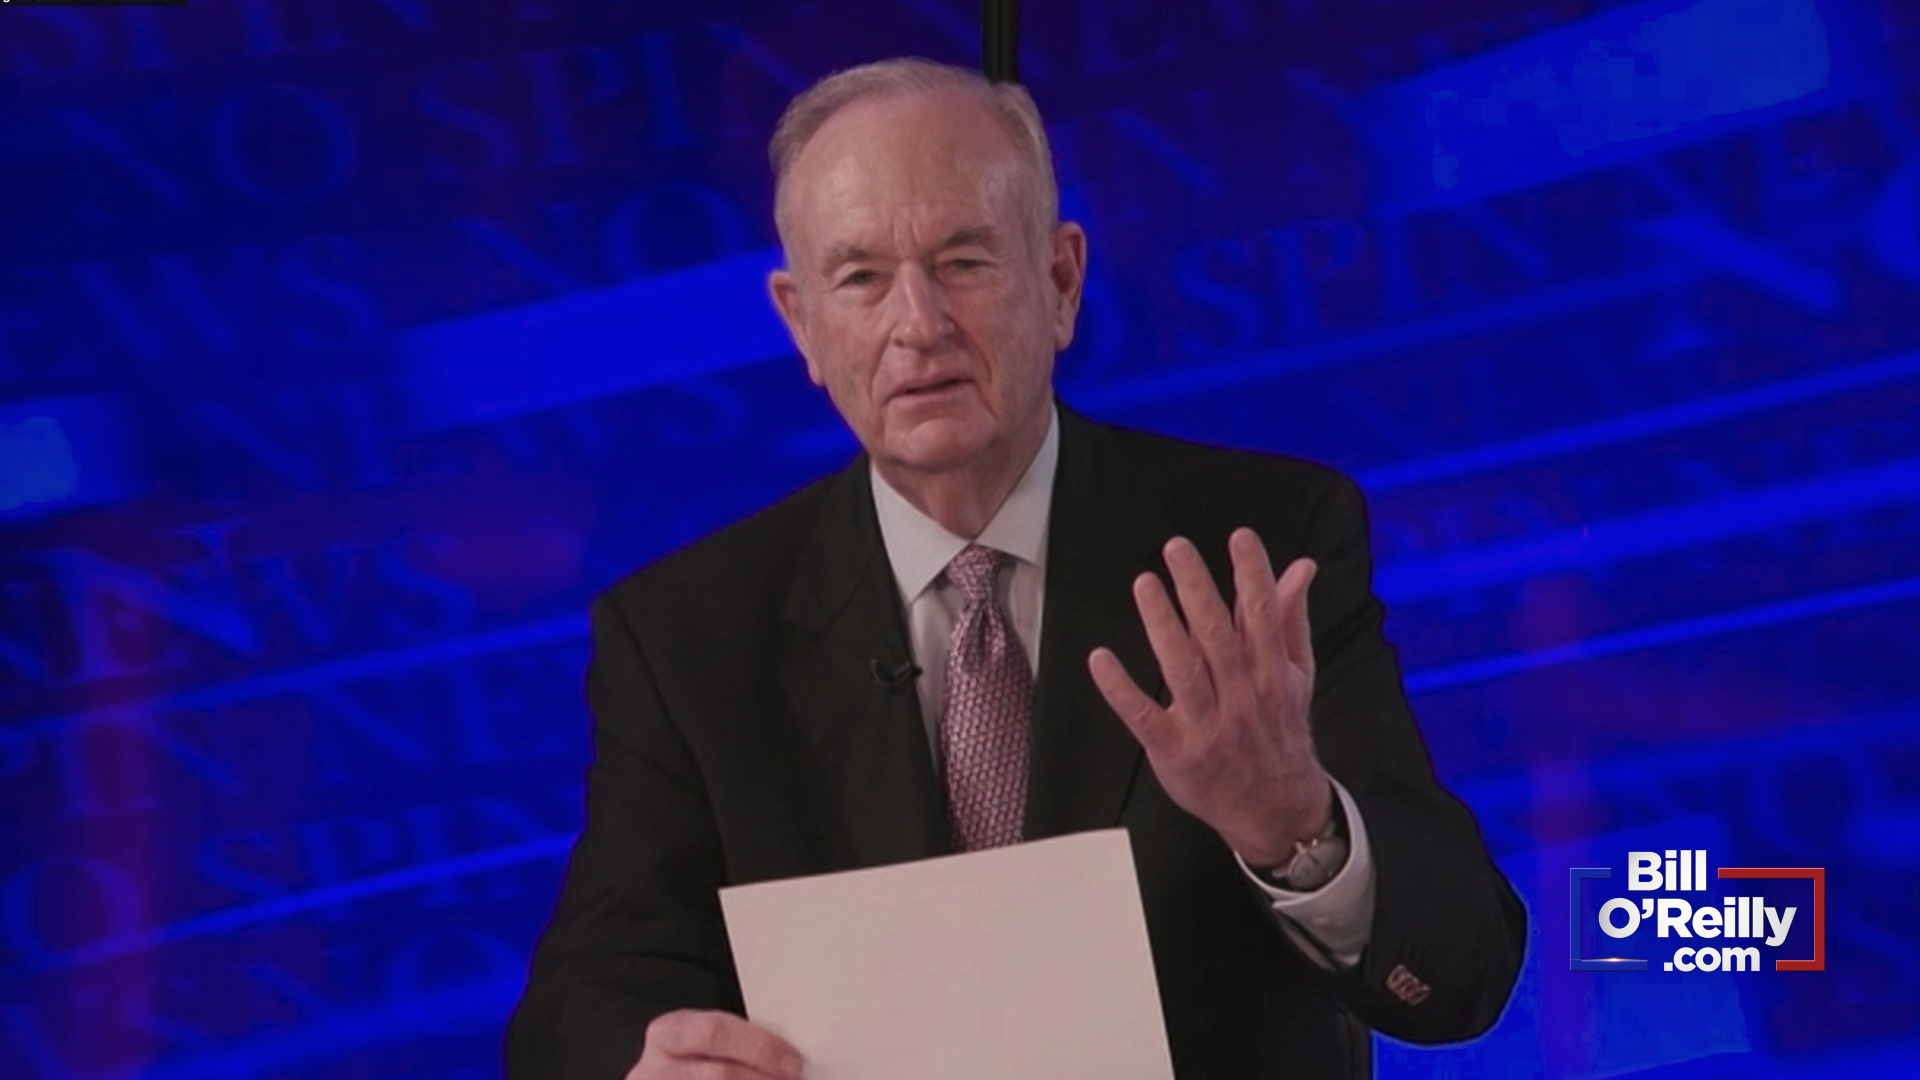 O'Reilly Reacts to Van Jones' Trump Claim